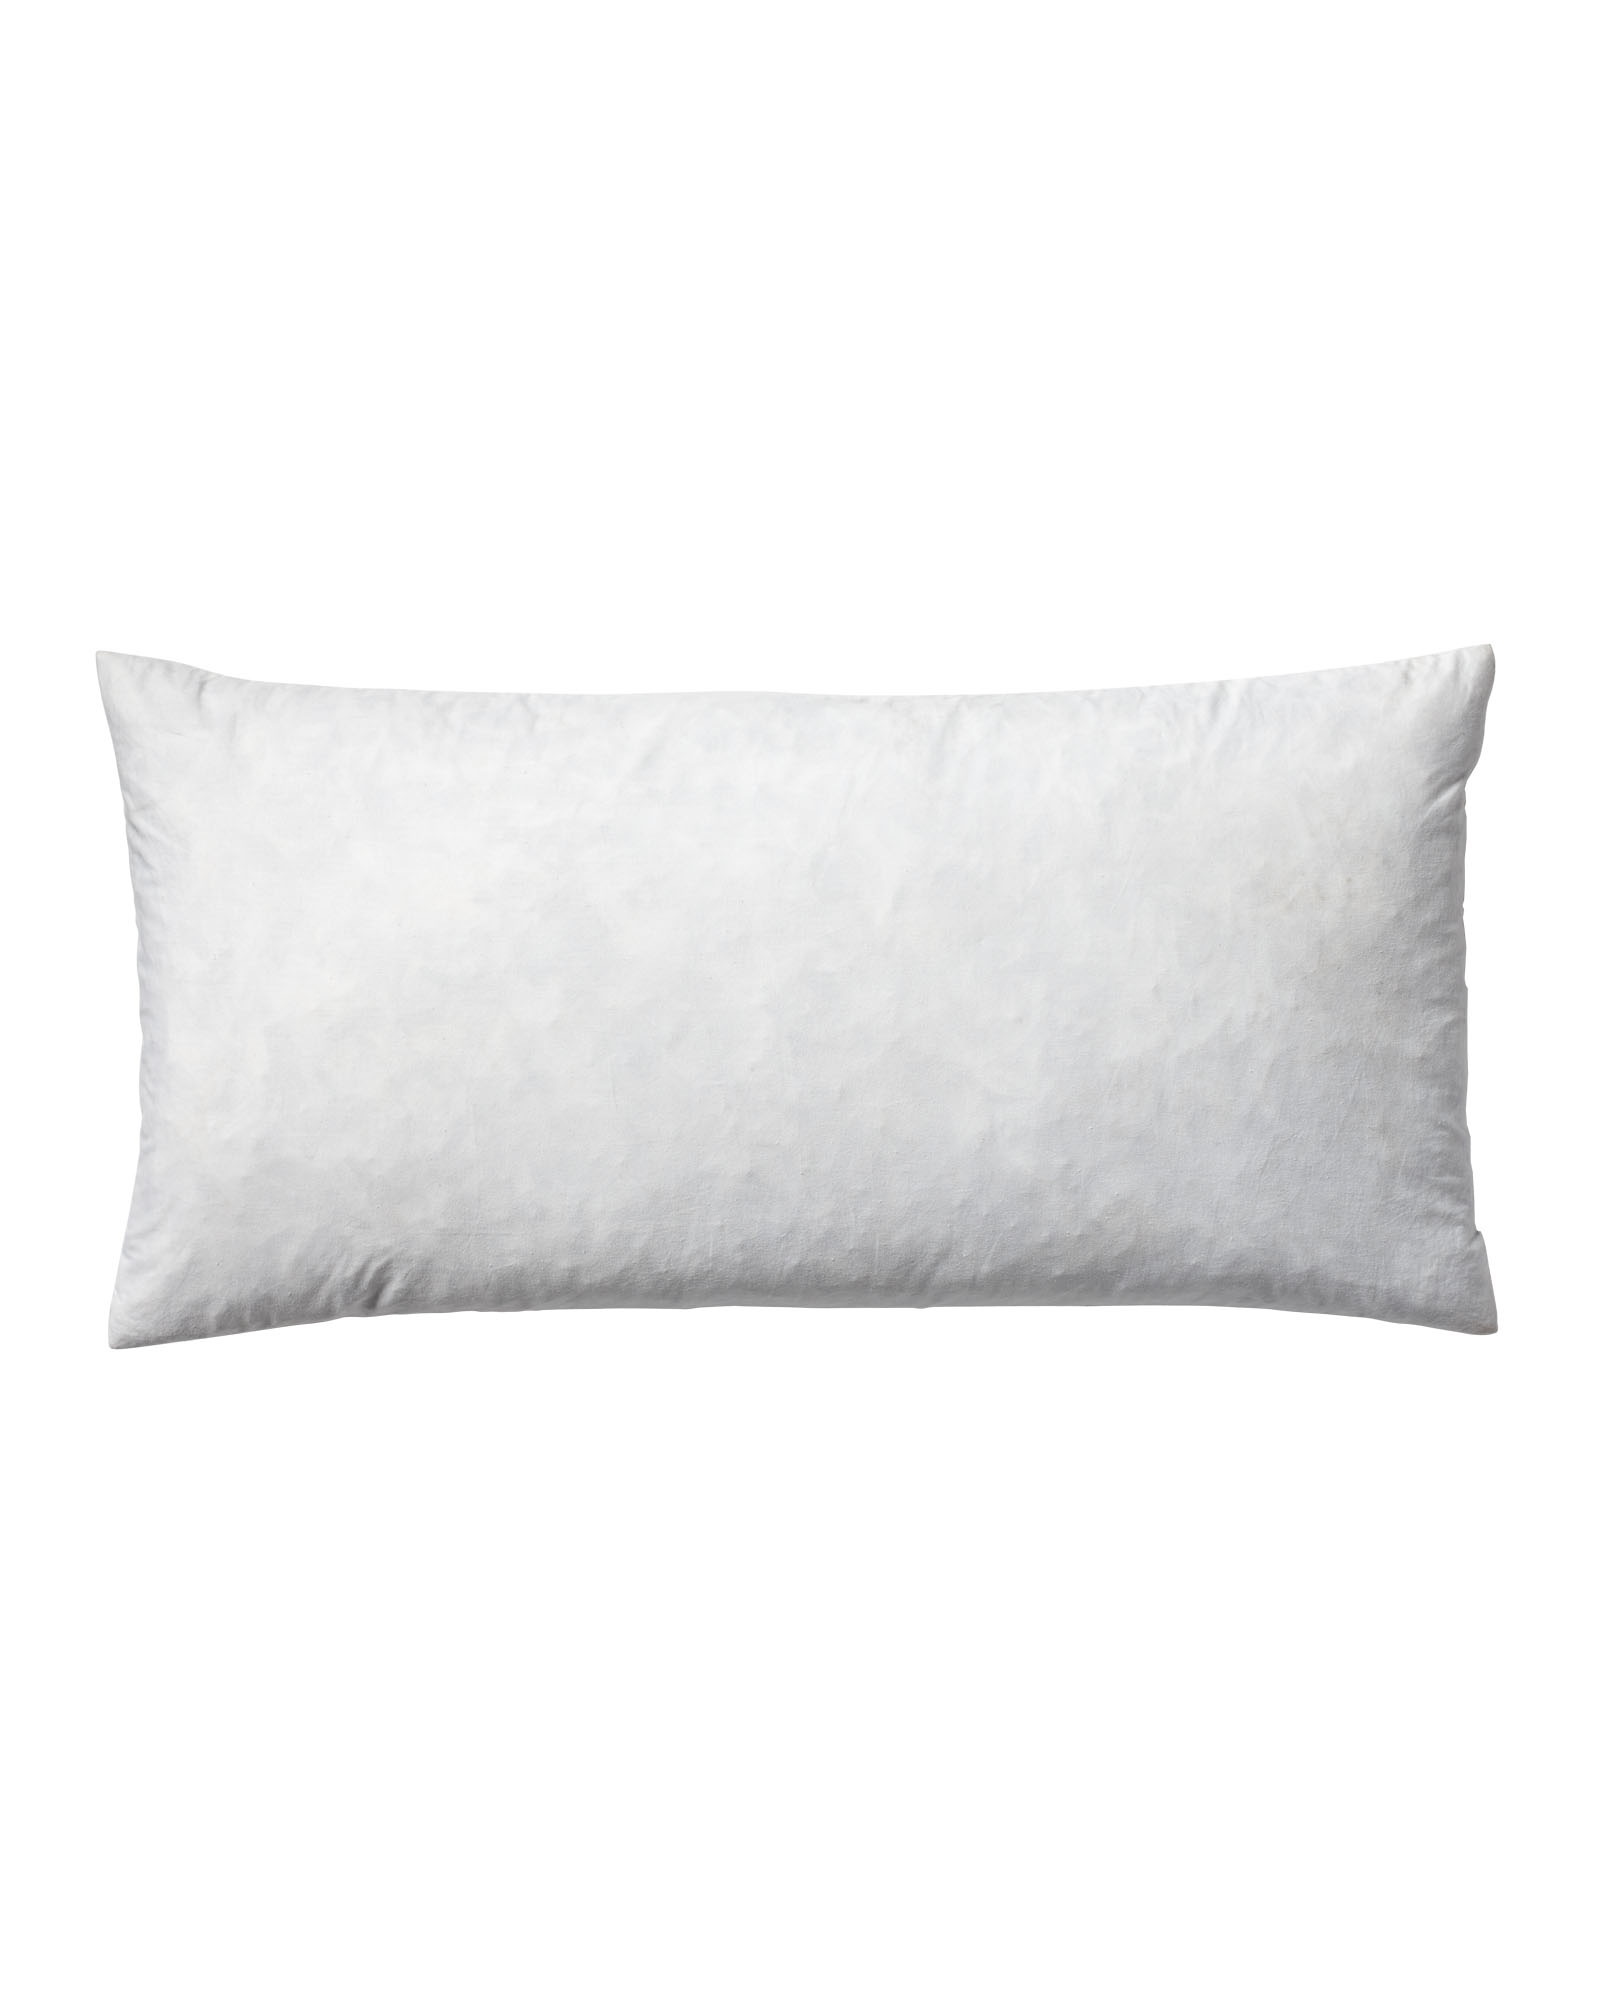 Pillow Insert, 12x21 - Image 0